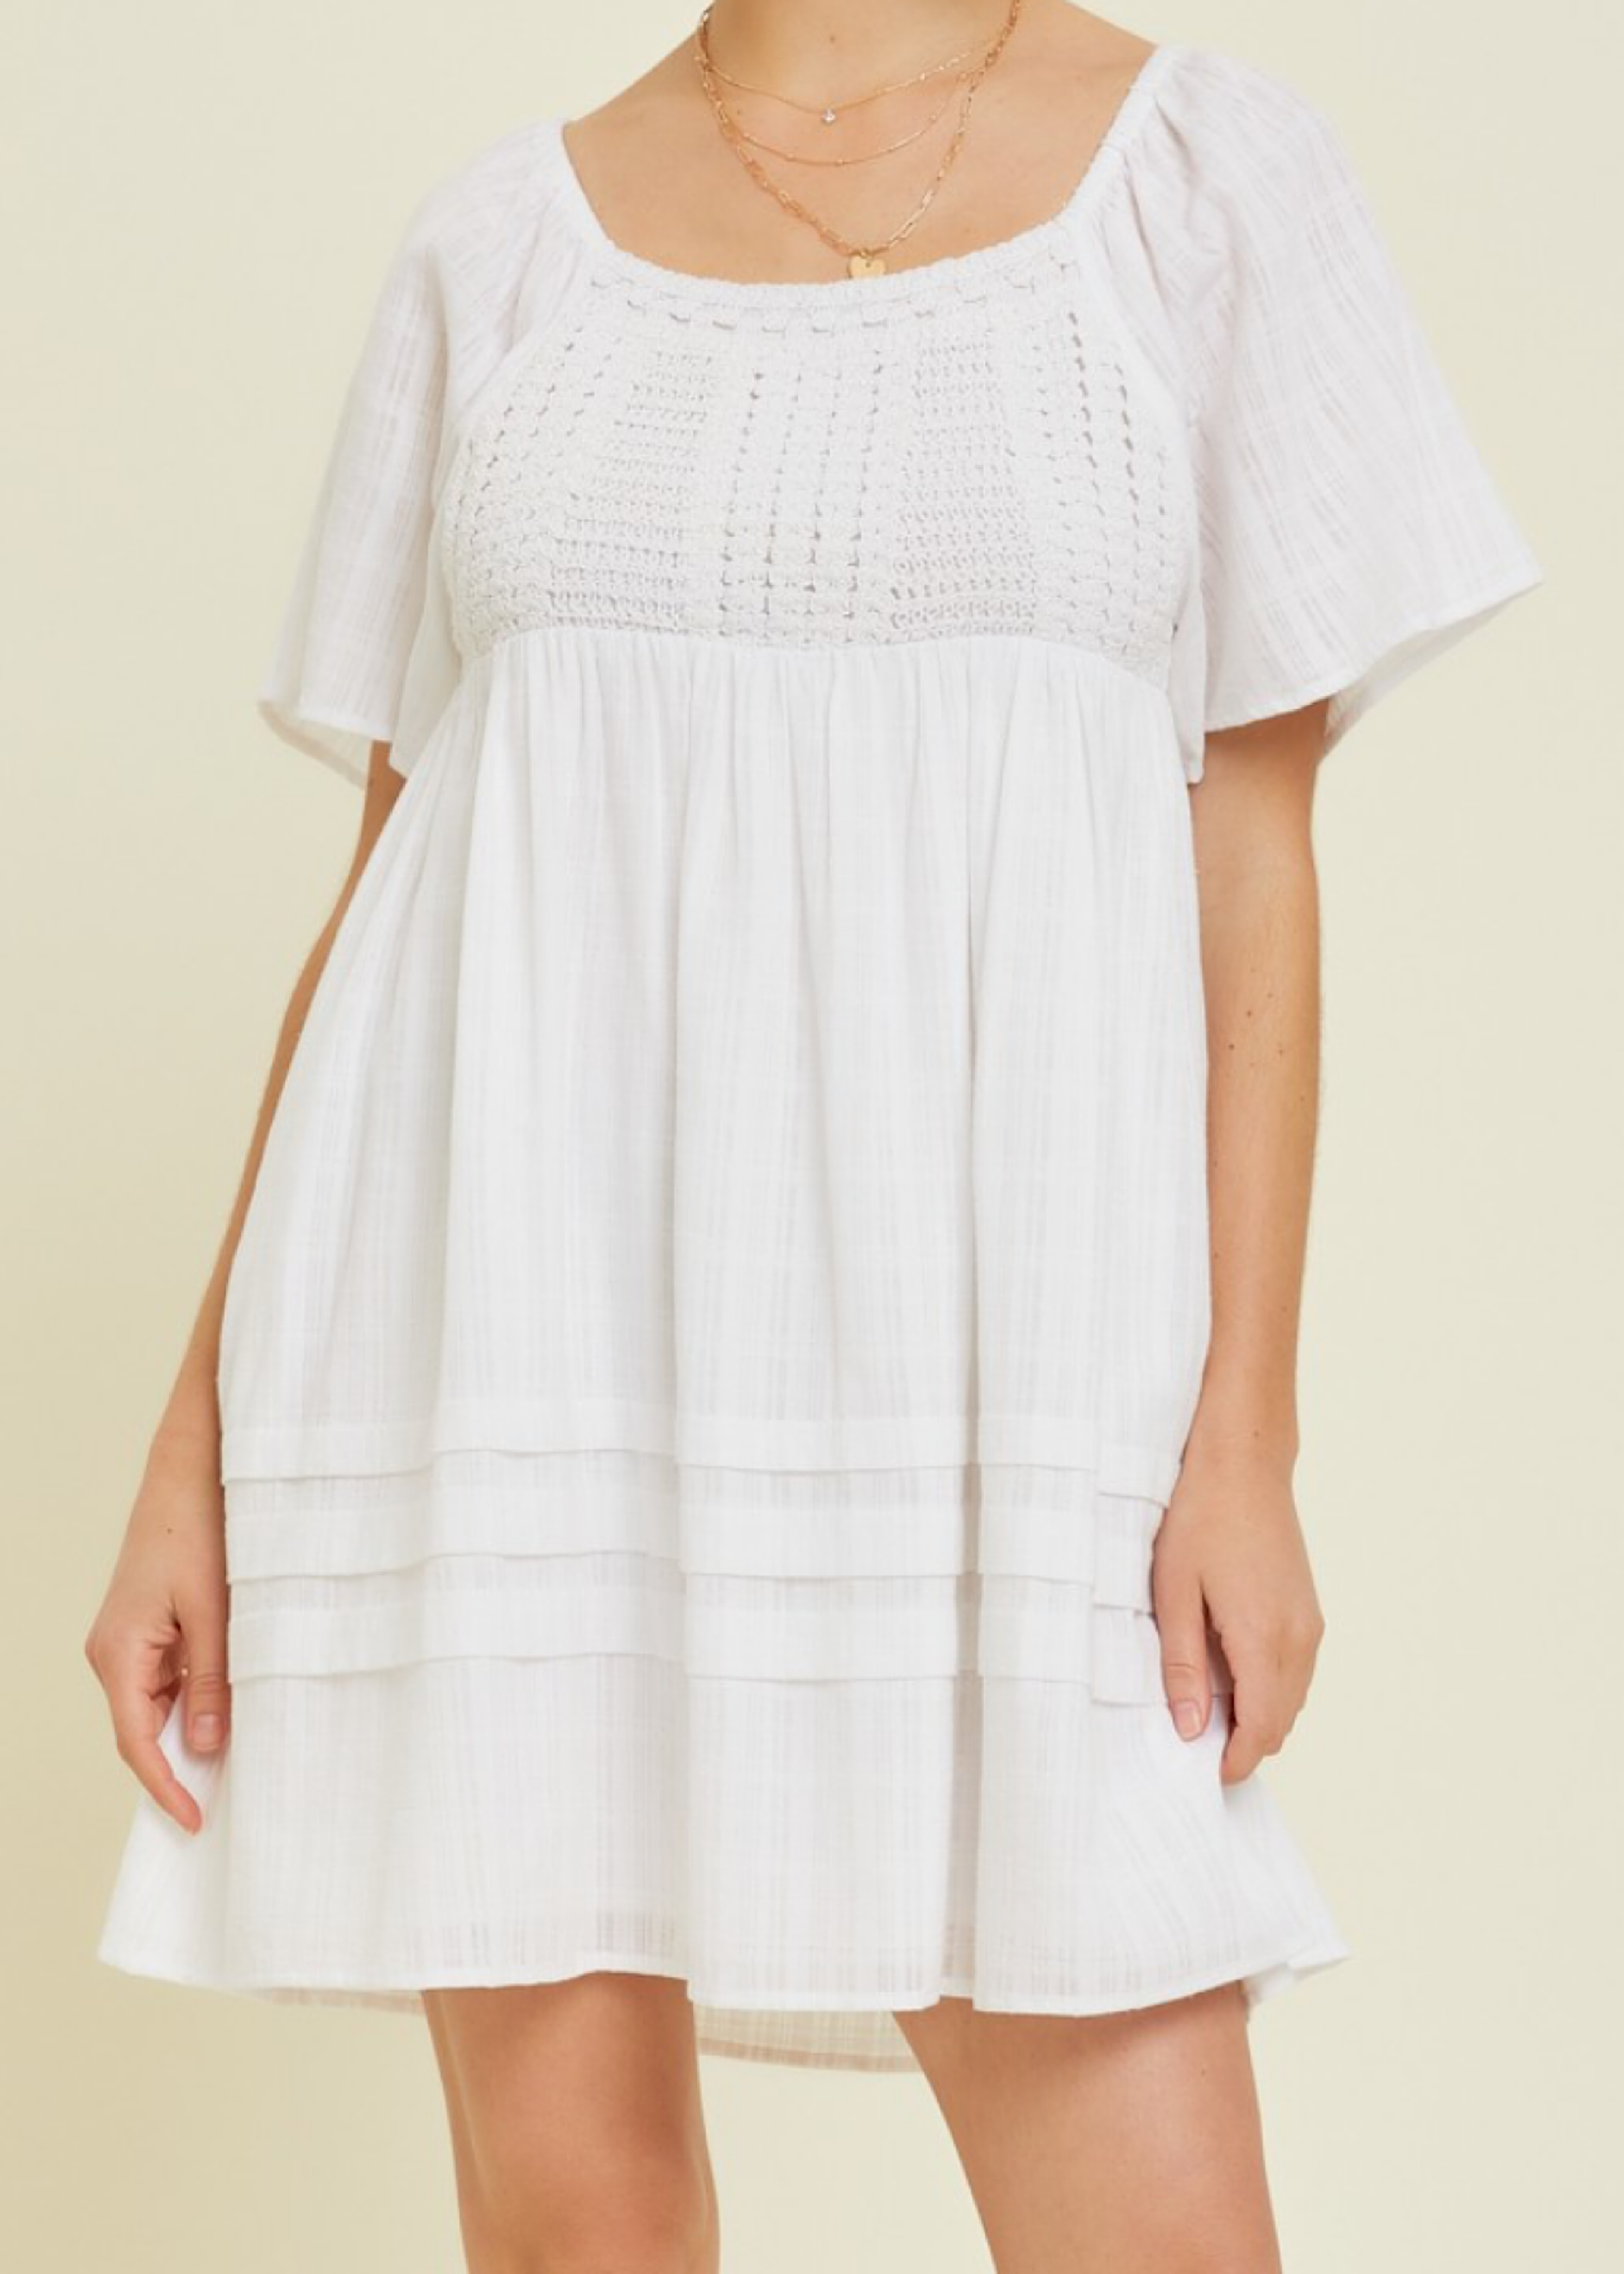 Off White Crochet Trimmed Square Neck Dress